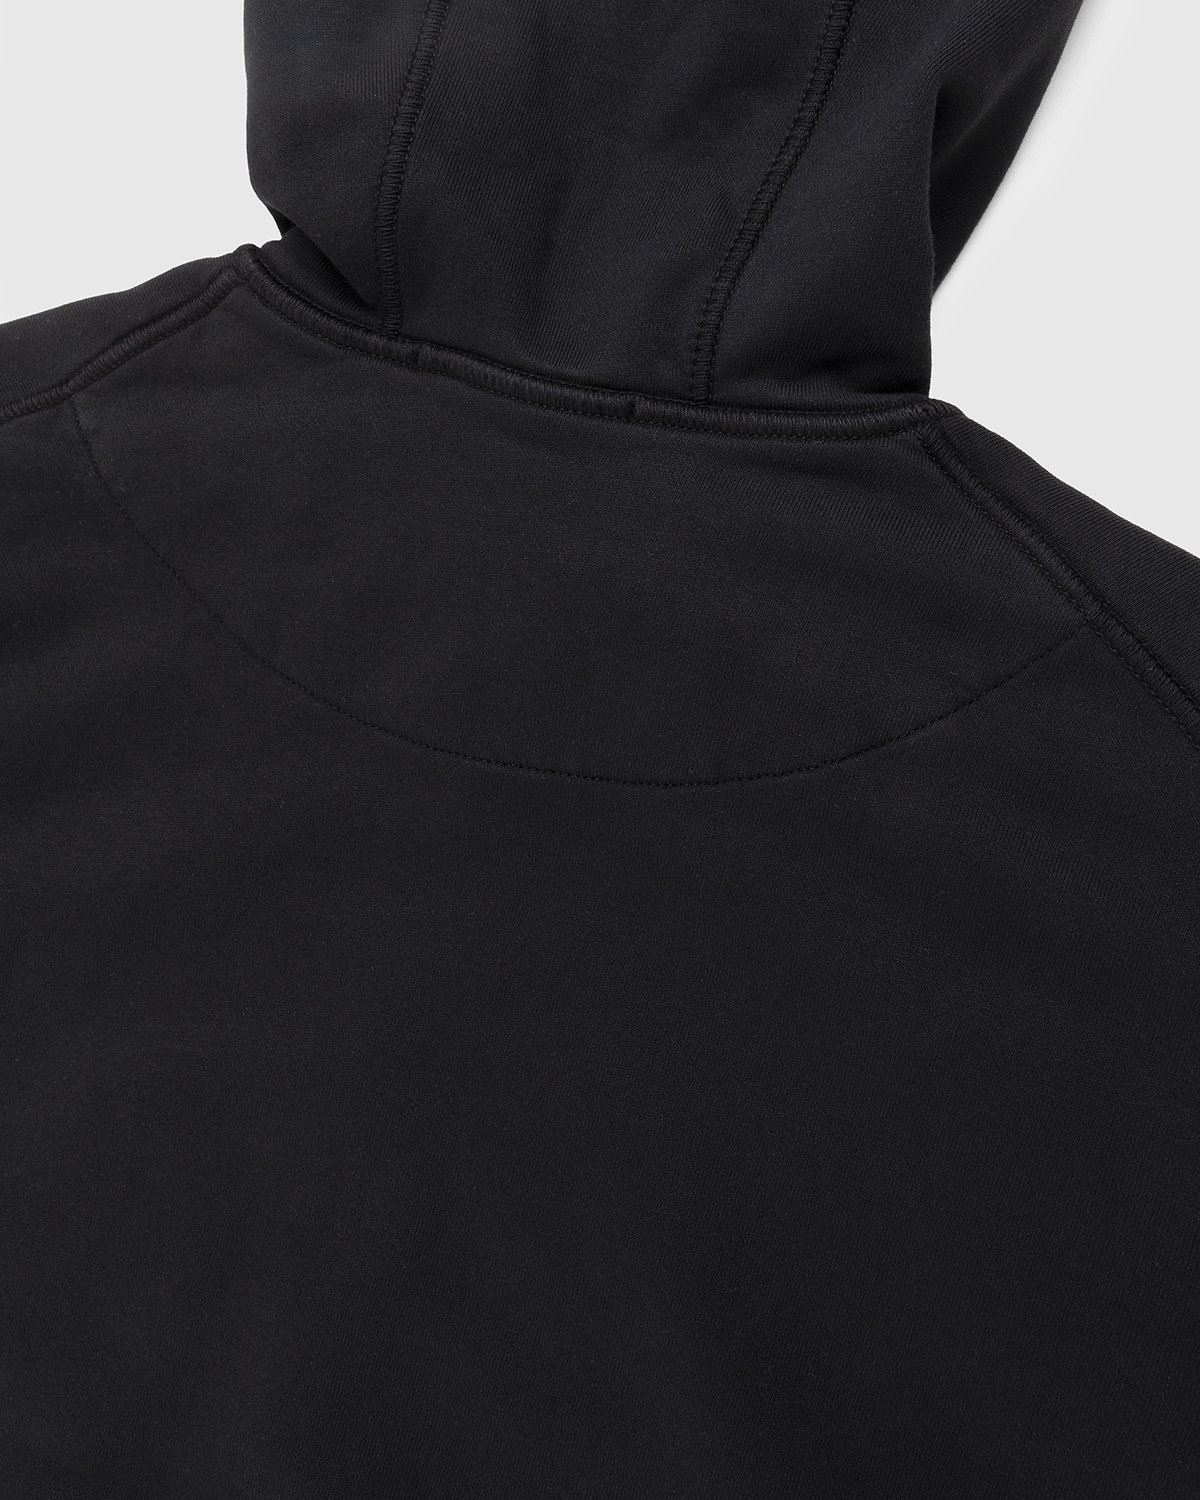 Stone Island - 64251 Garment-Dyed Full-Zip Hoodie Black - Clothing - Black - Image 3